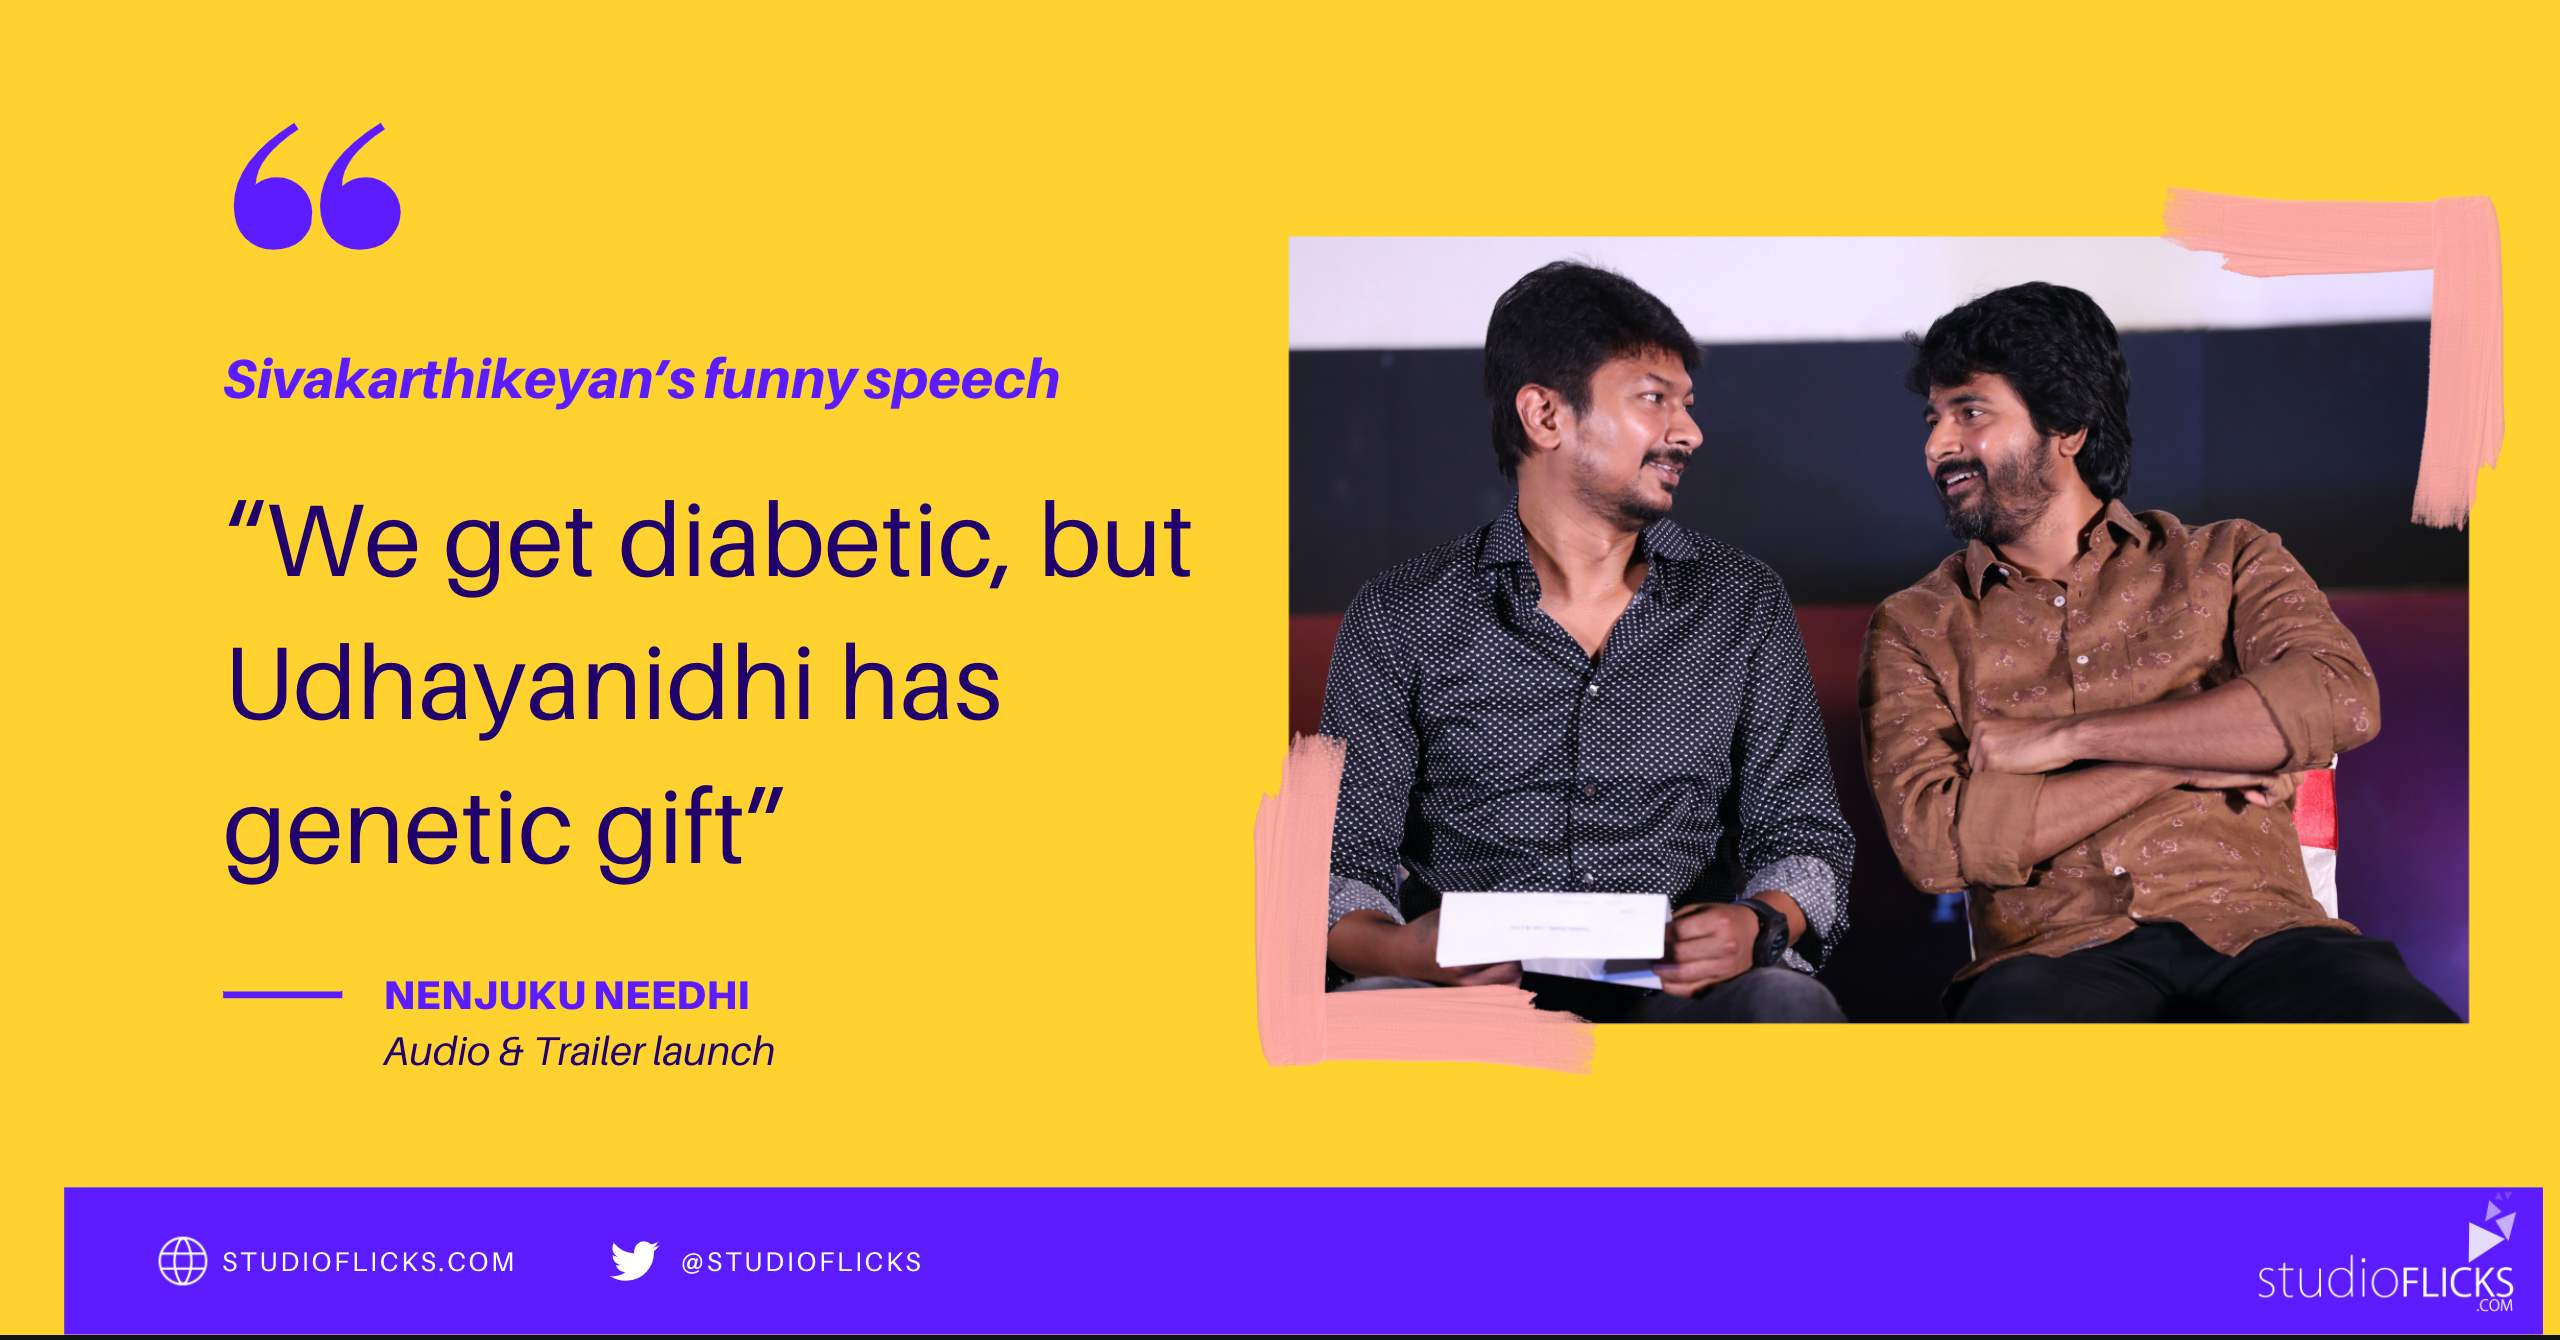 We get diabetic but Udhayanidhi has genetic gift – Actor Sivakarthikeyans funny speech